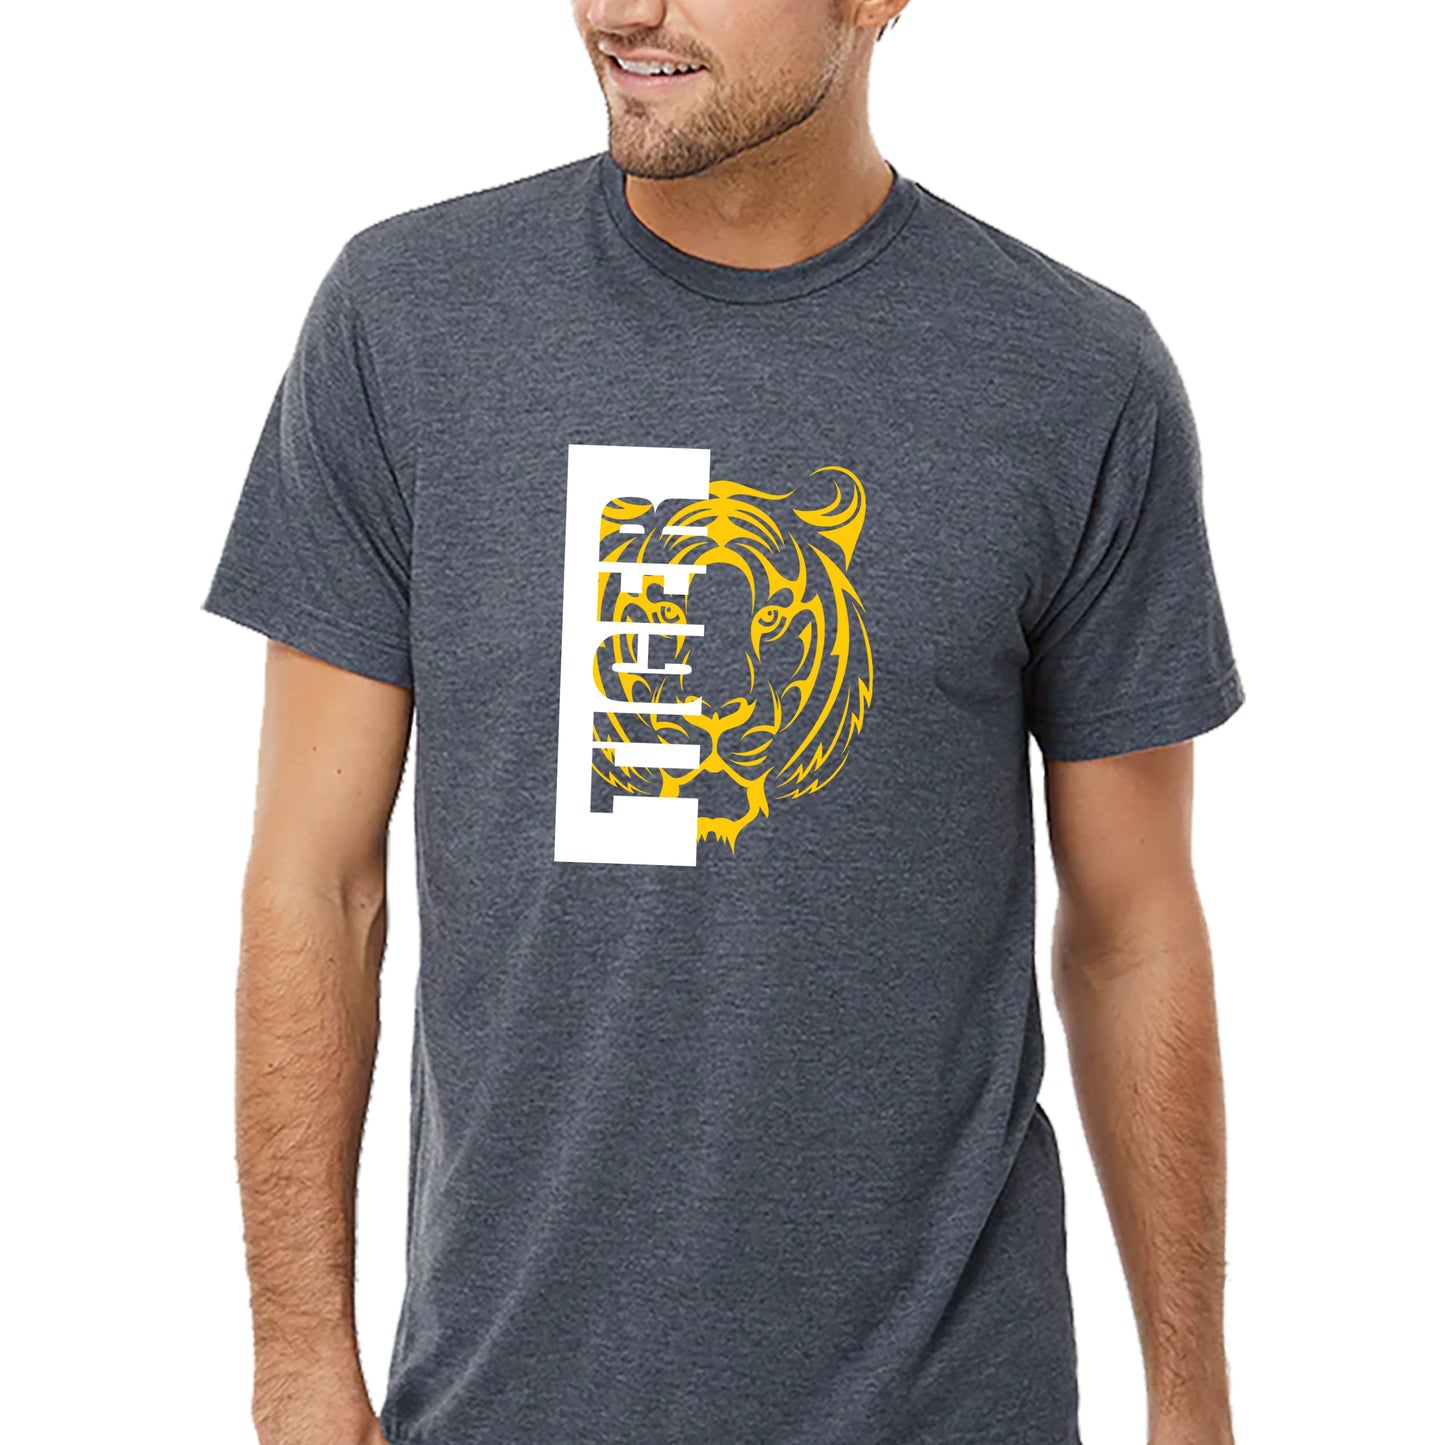 Tiger T-shirt